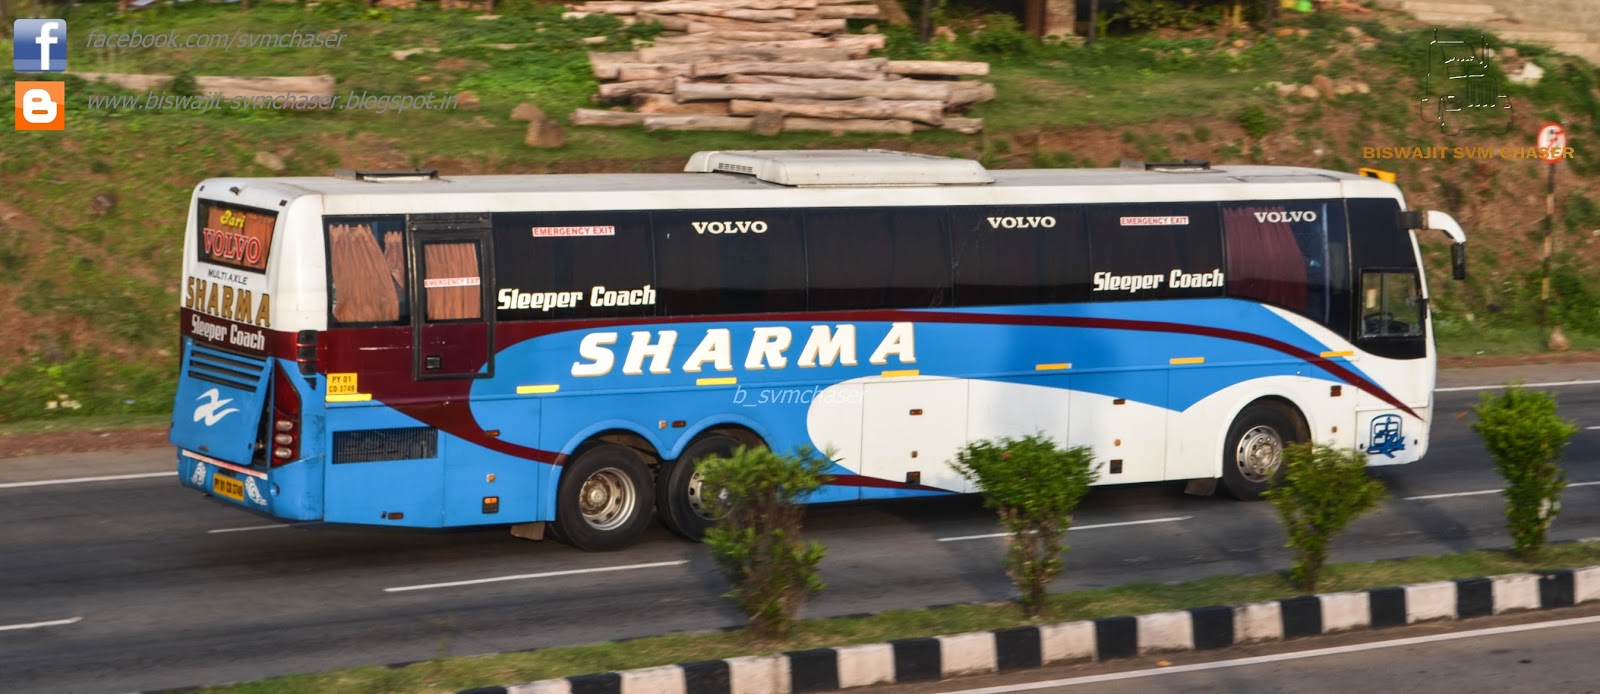 Sharma Transports VOLVO B9R Multiaxle Sleeper PY01 CD 3749 Biswajit